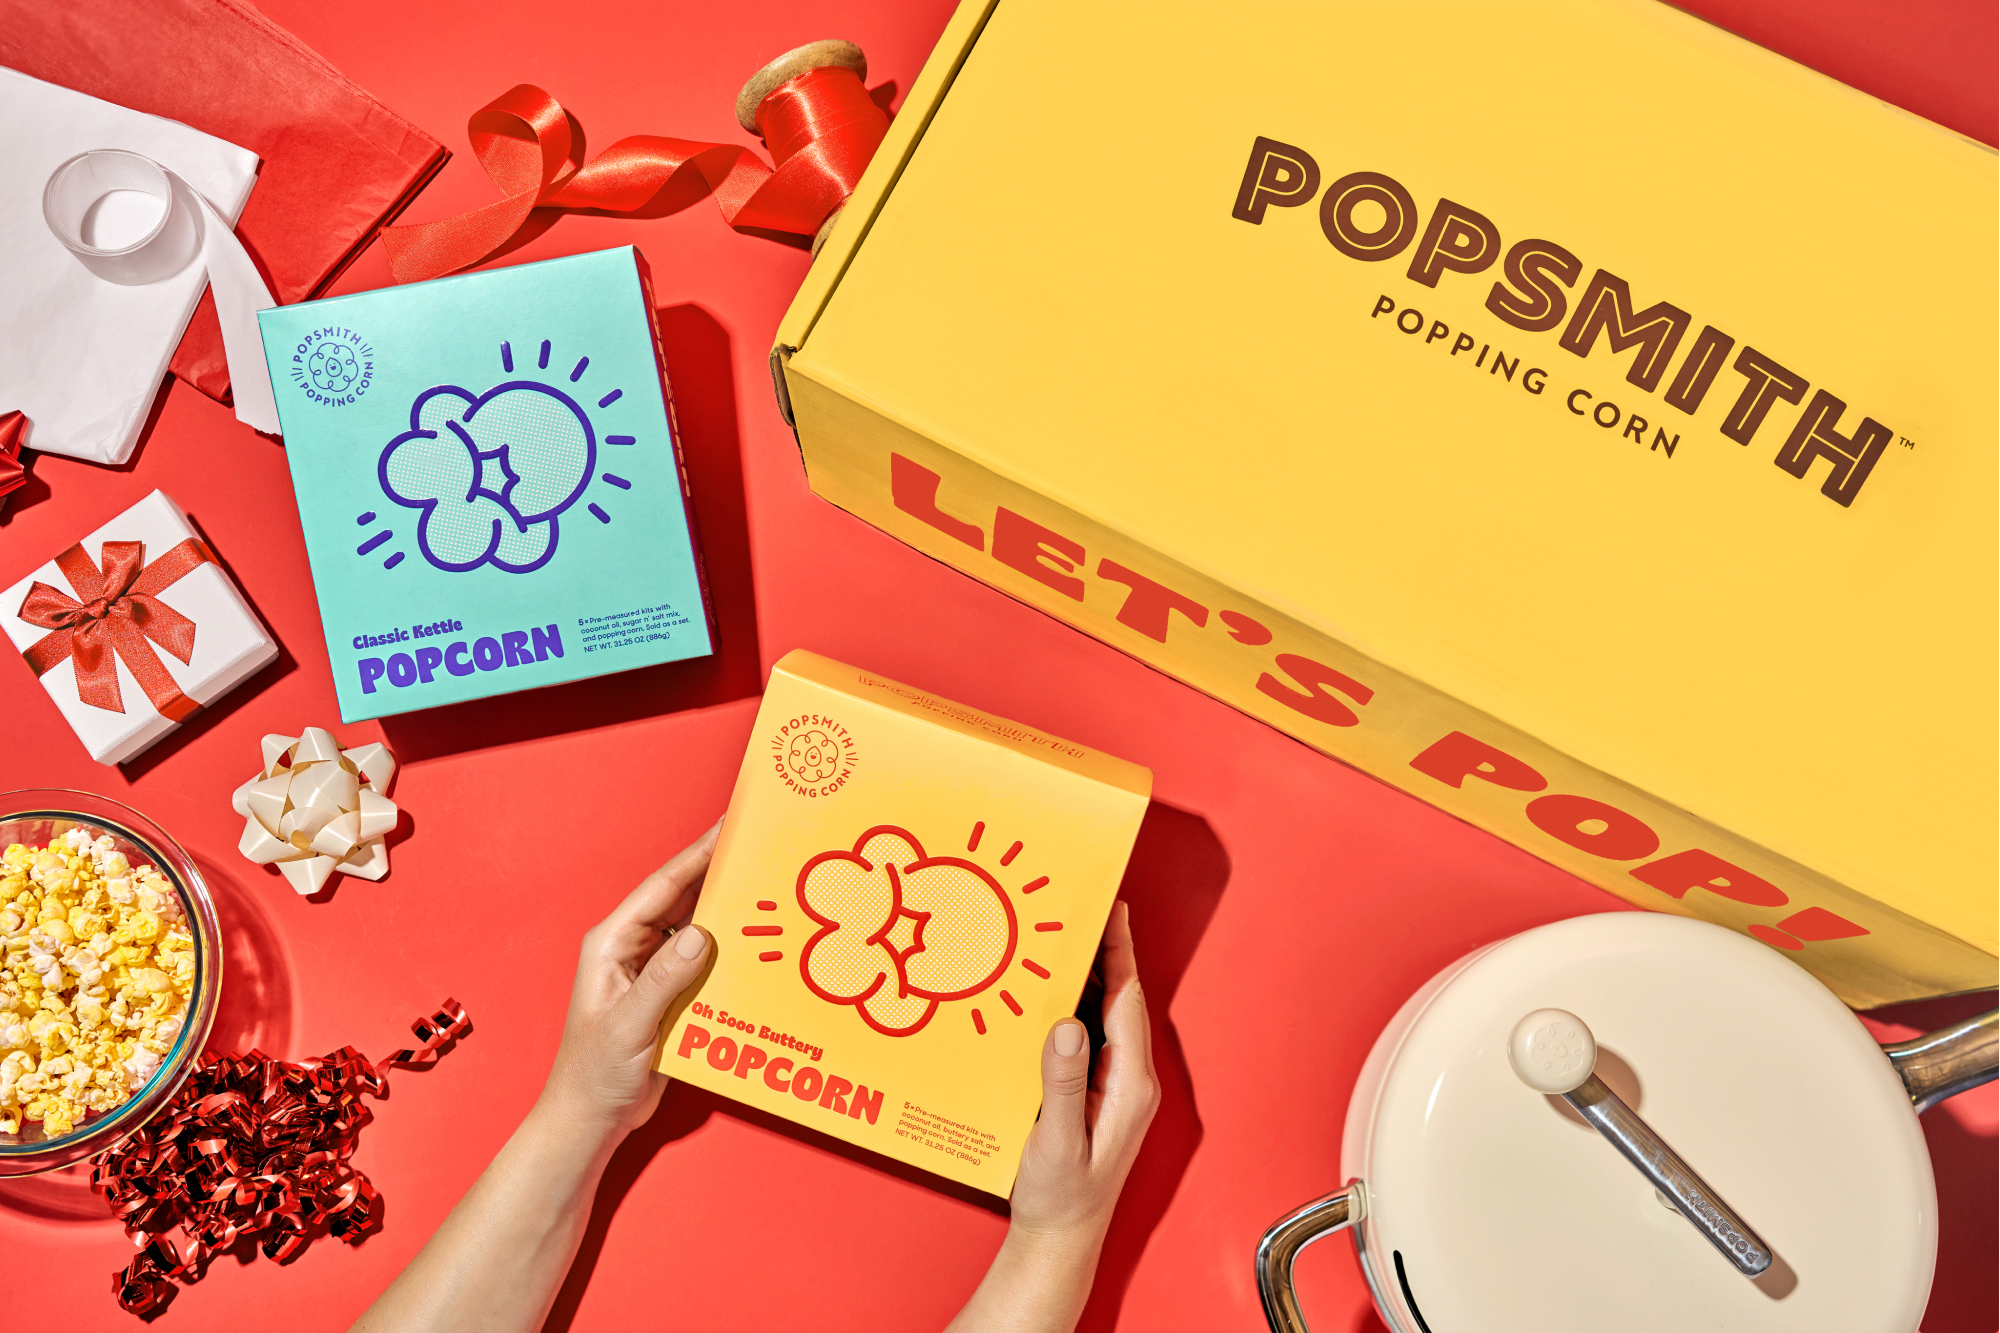 Popsmith The Popper: Cream OS